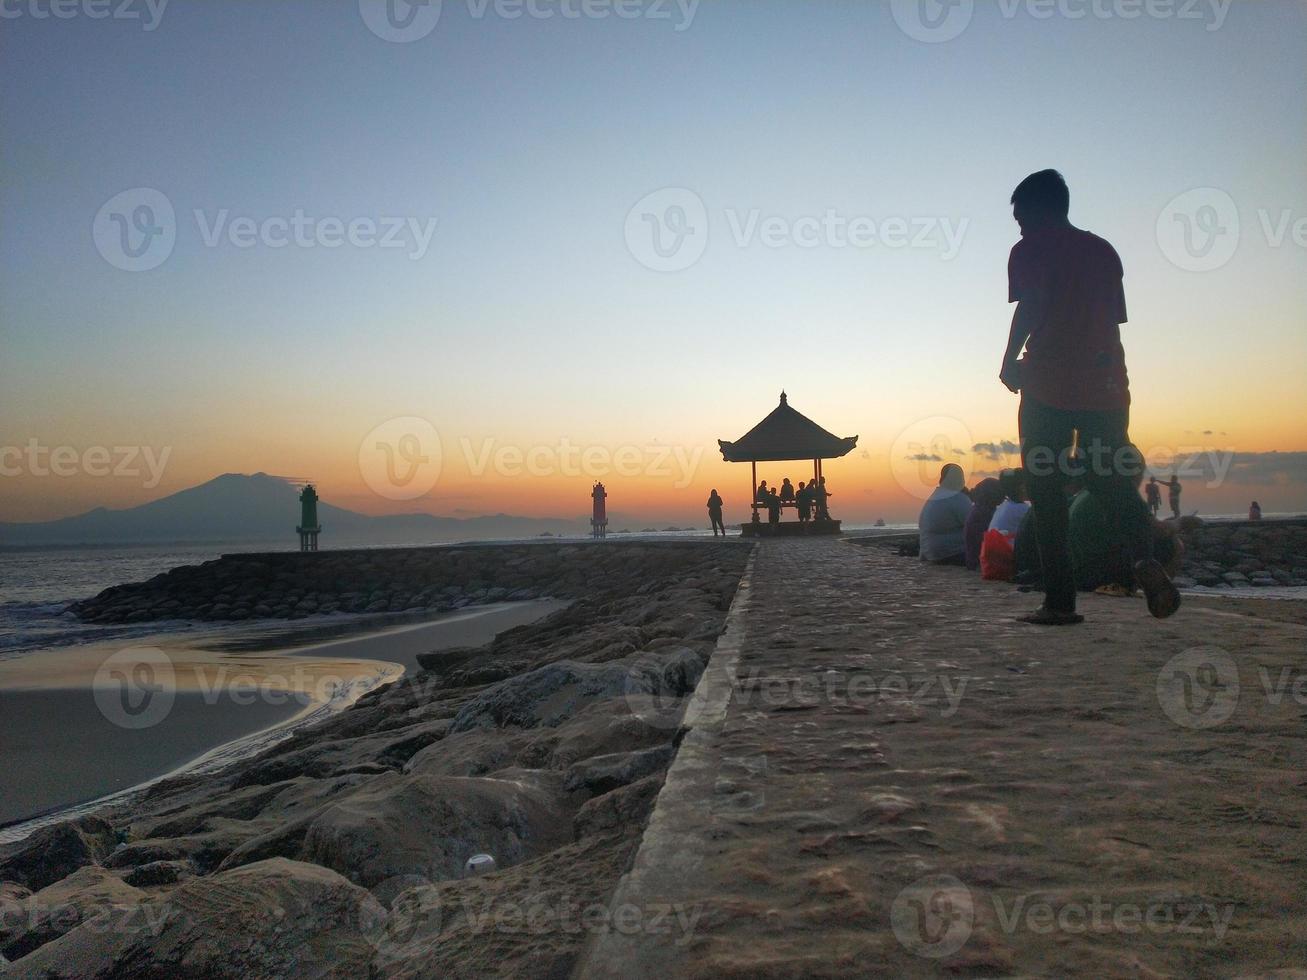 landscape photo of beach scenery in sanur Bali